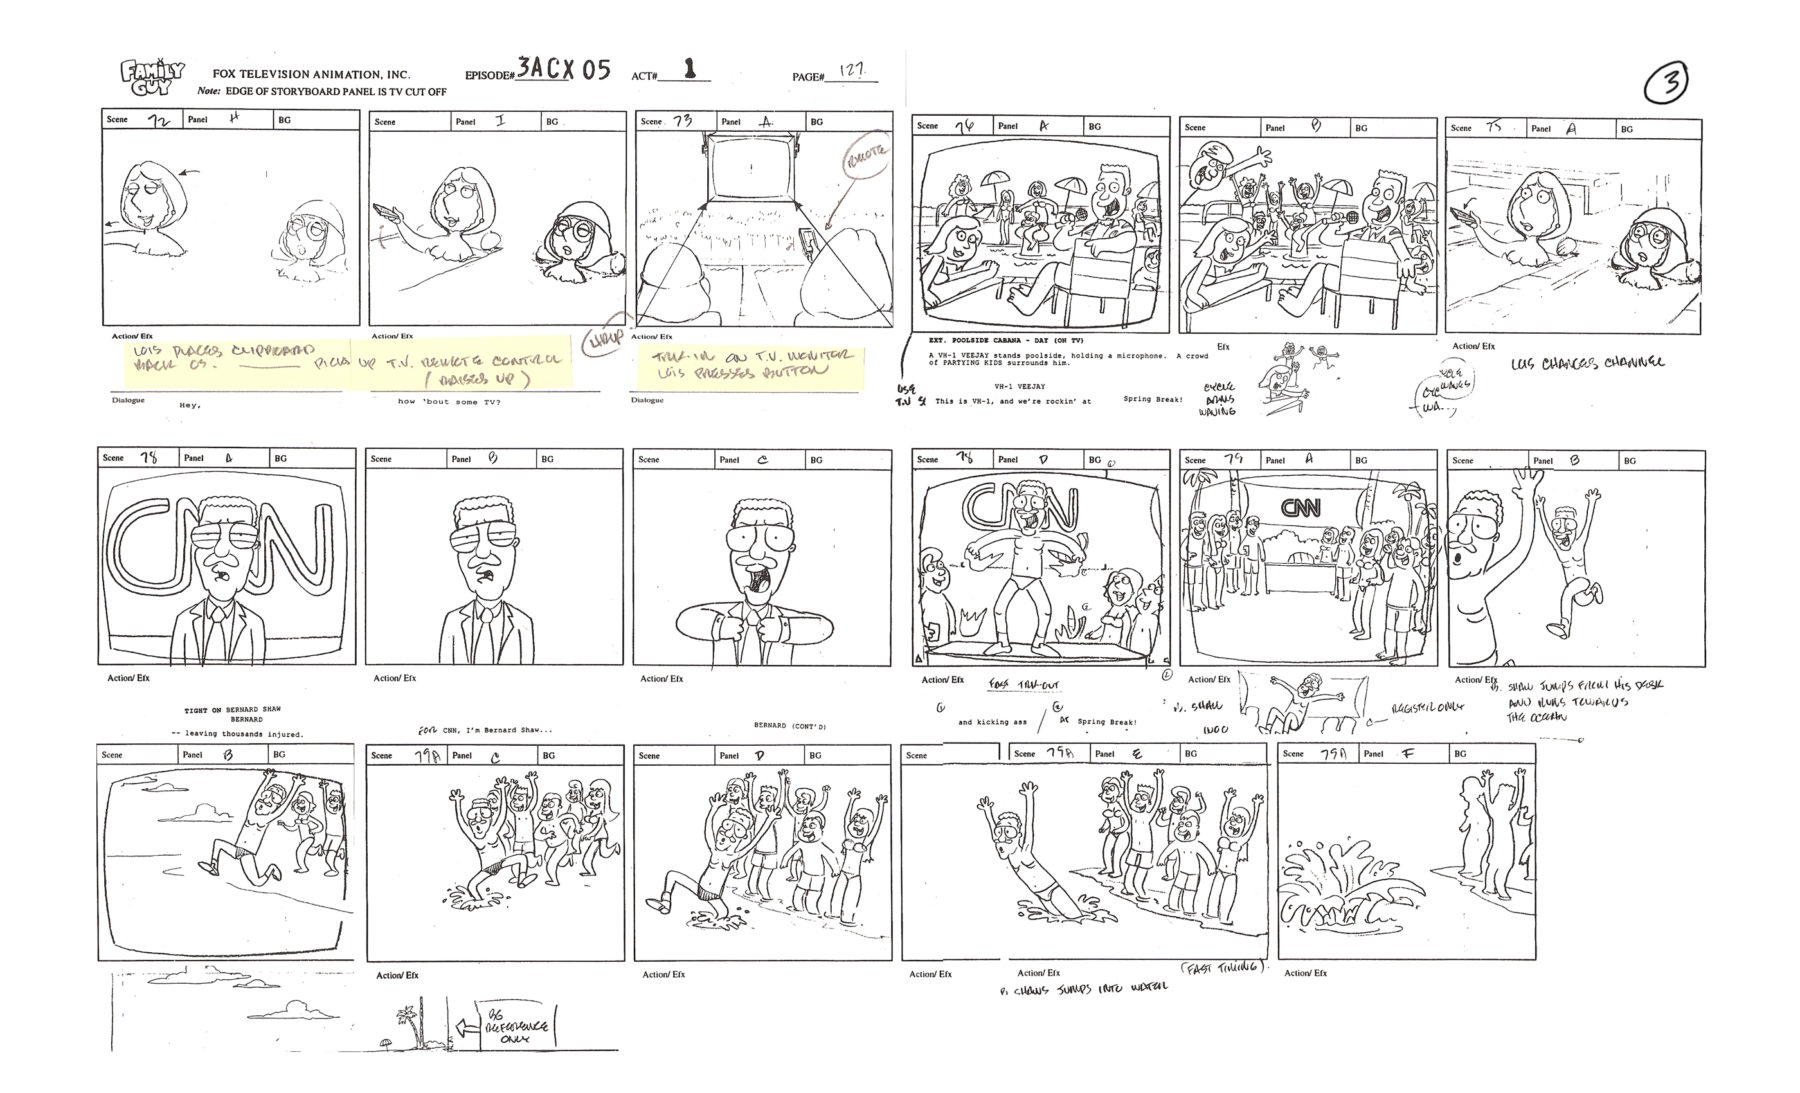 Bert Ring's storyboards for The Family Guy, Fox TV Animation